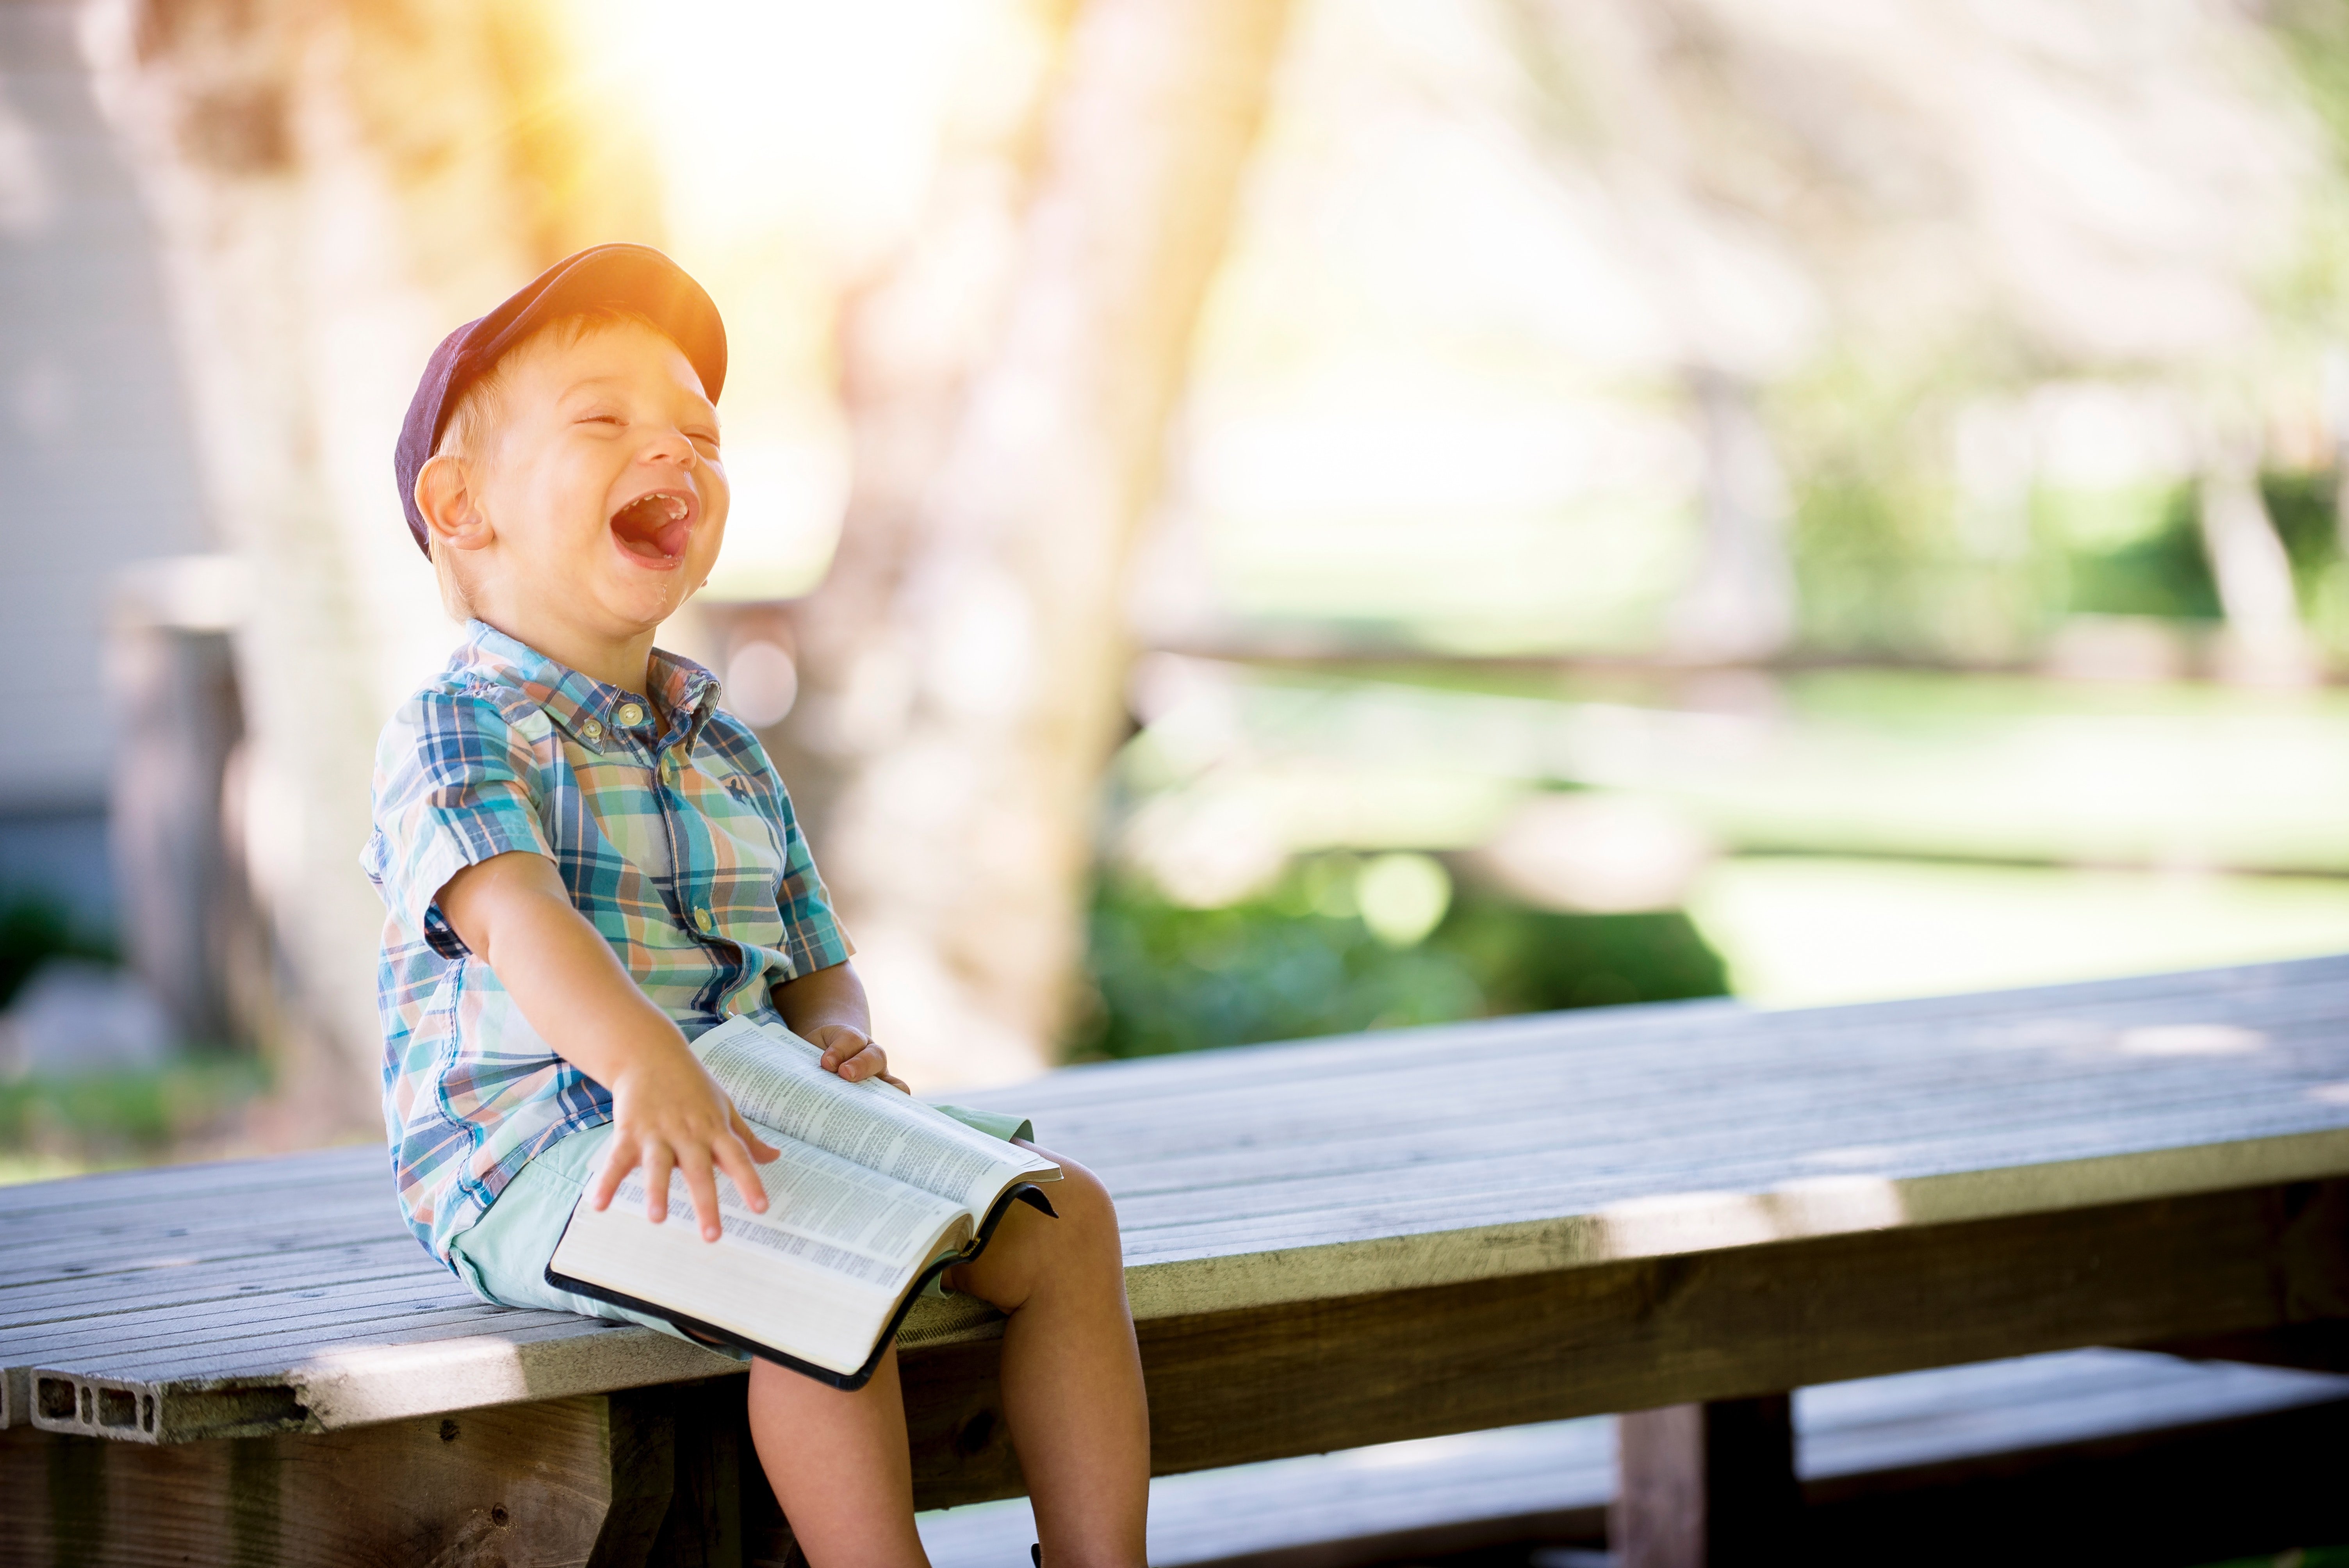 A child laughing | Source: Unsplash.com